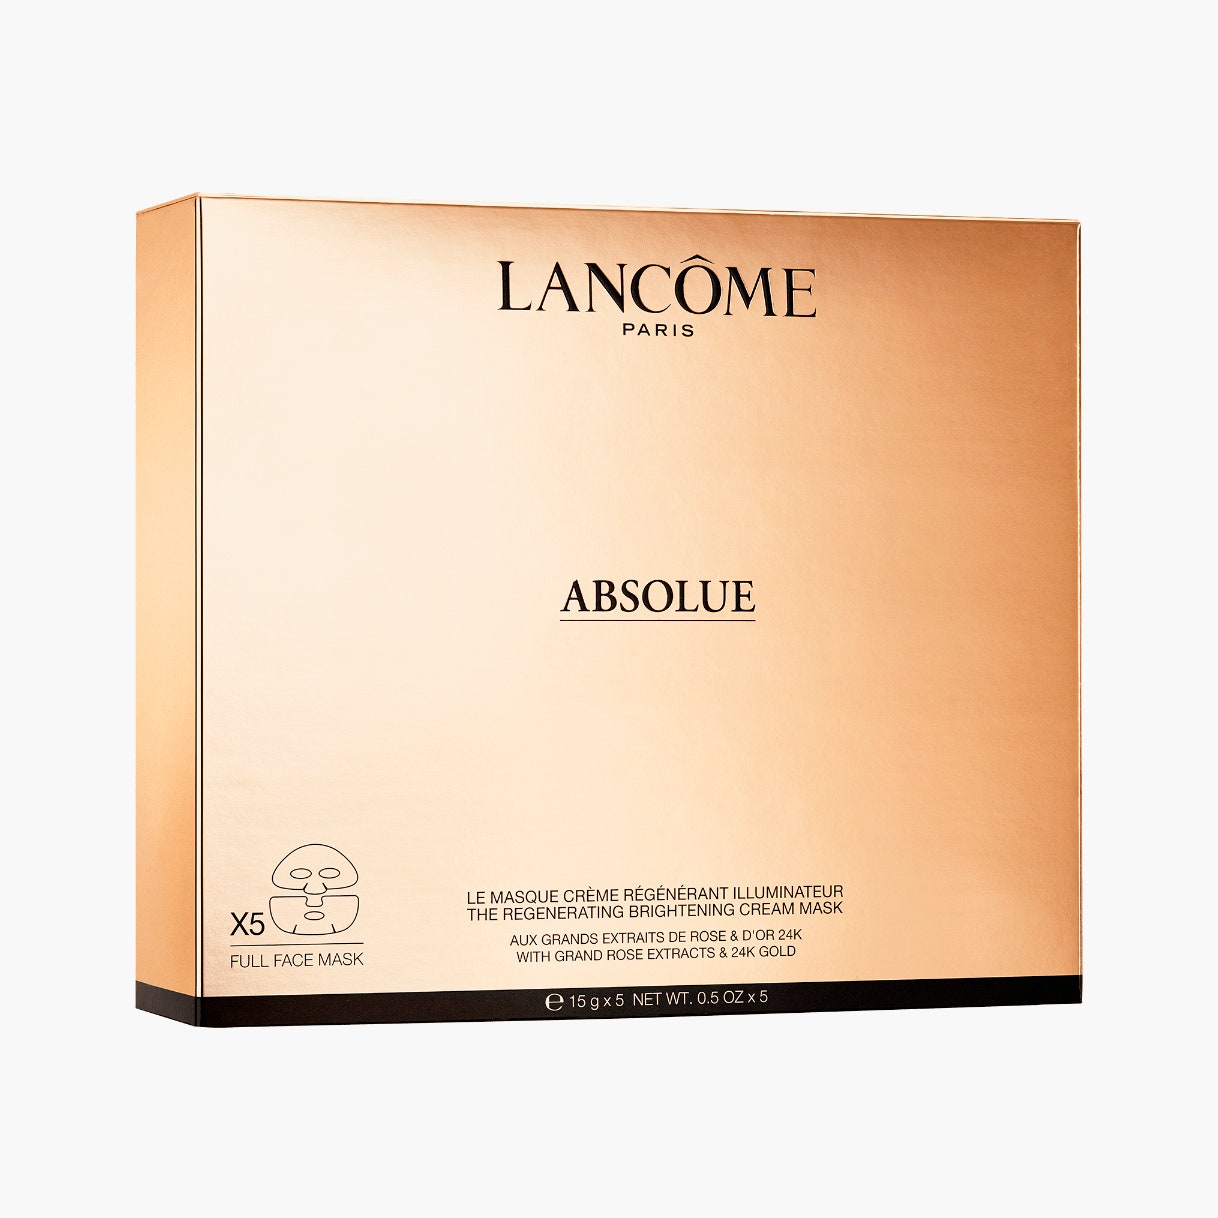 Тканевые креммаски для лица Absolue 9750 рублей Lancôme